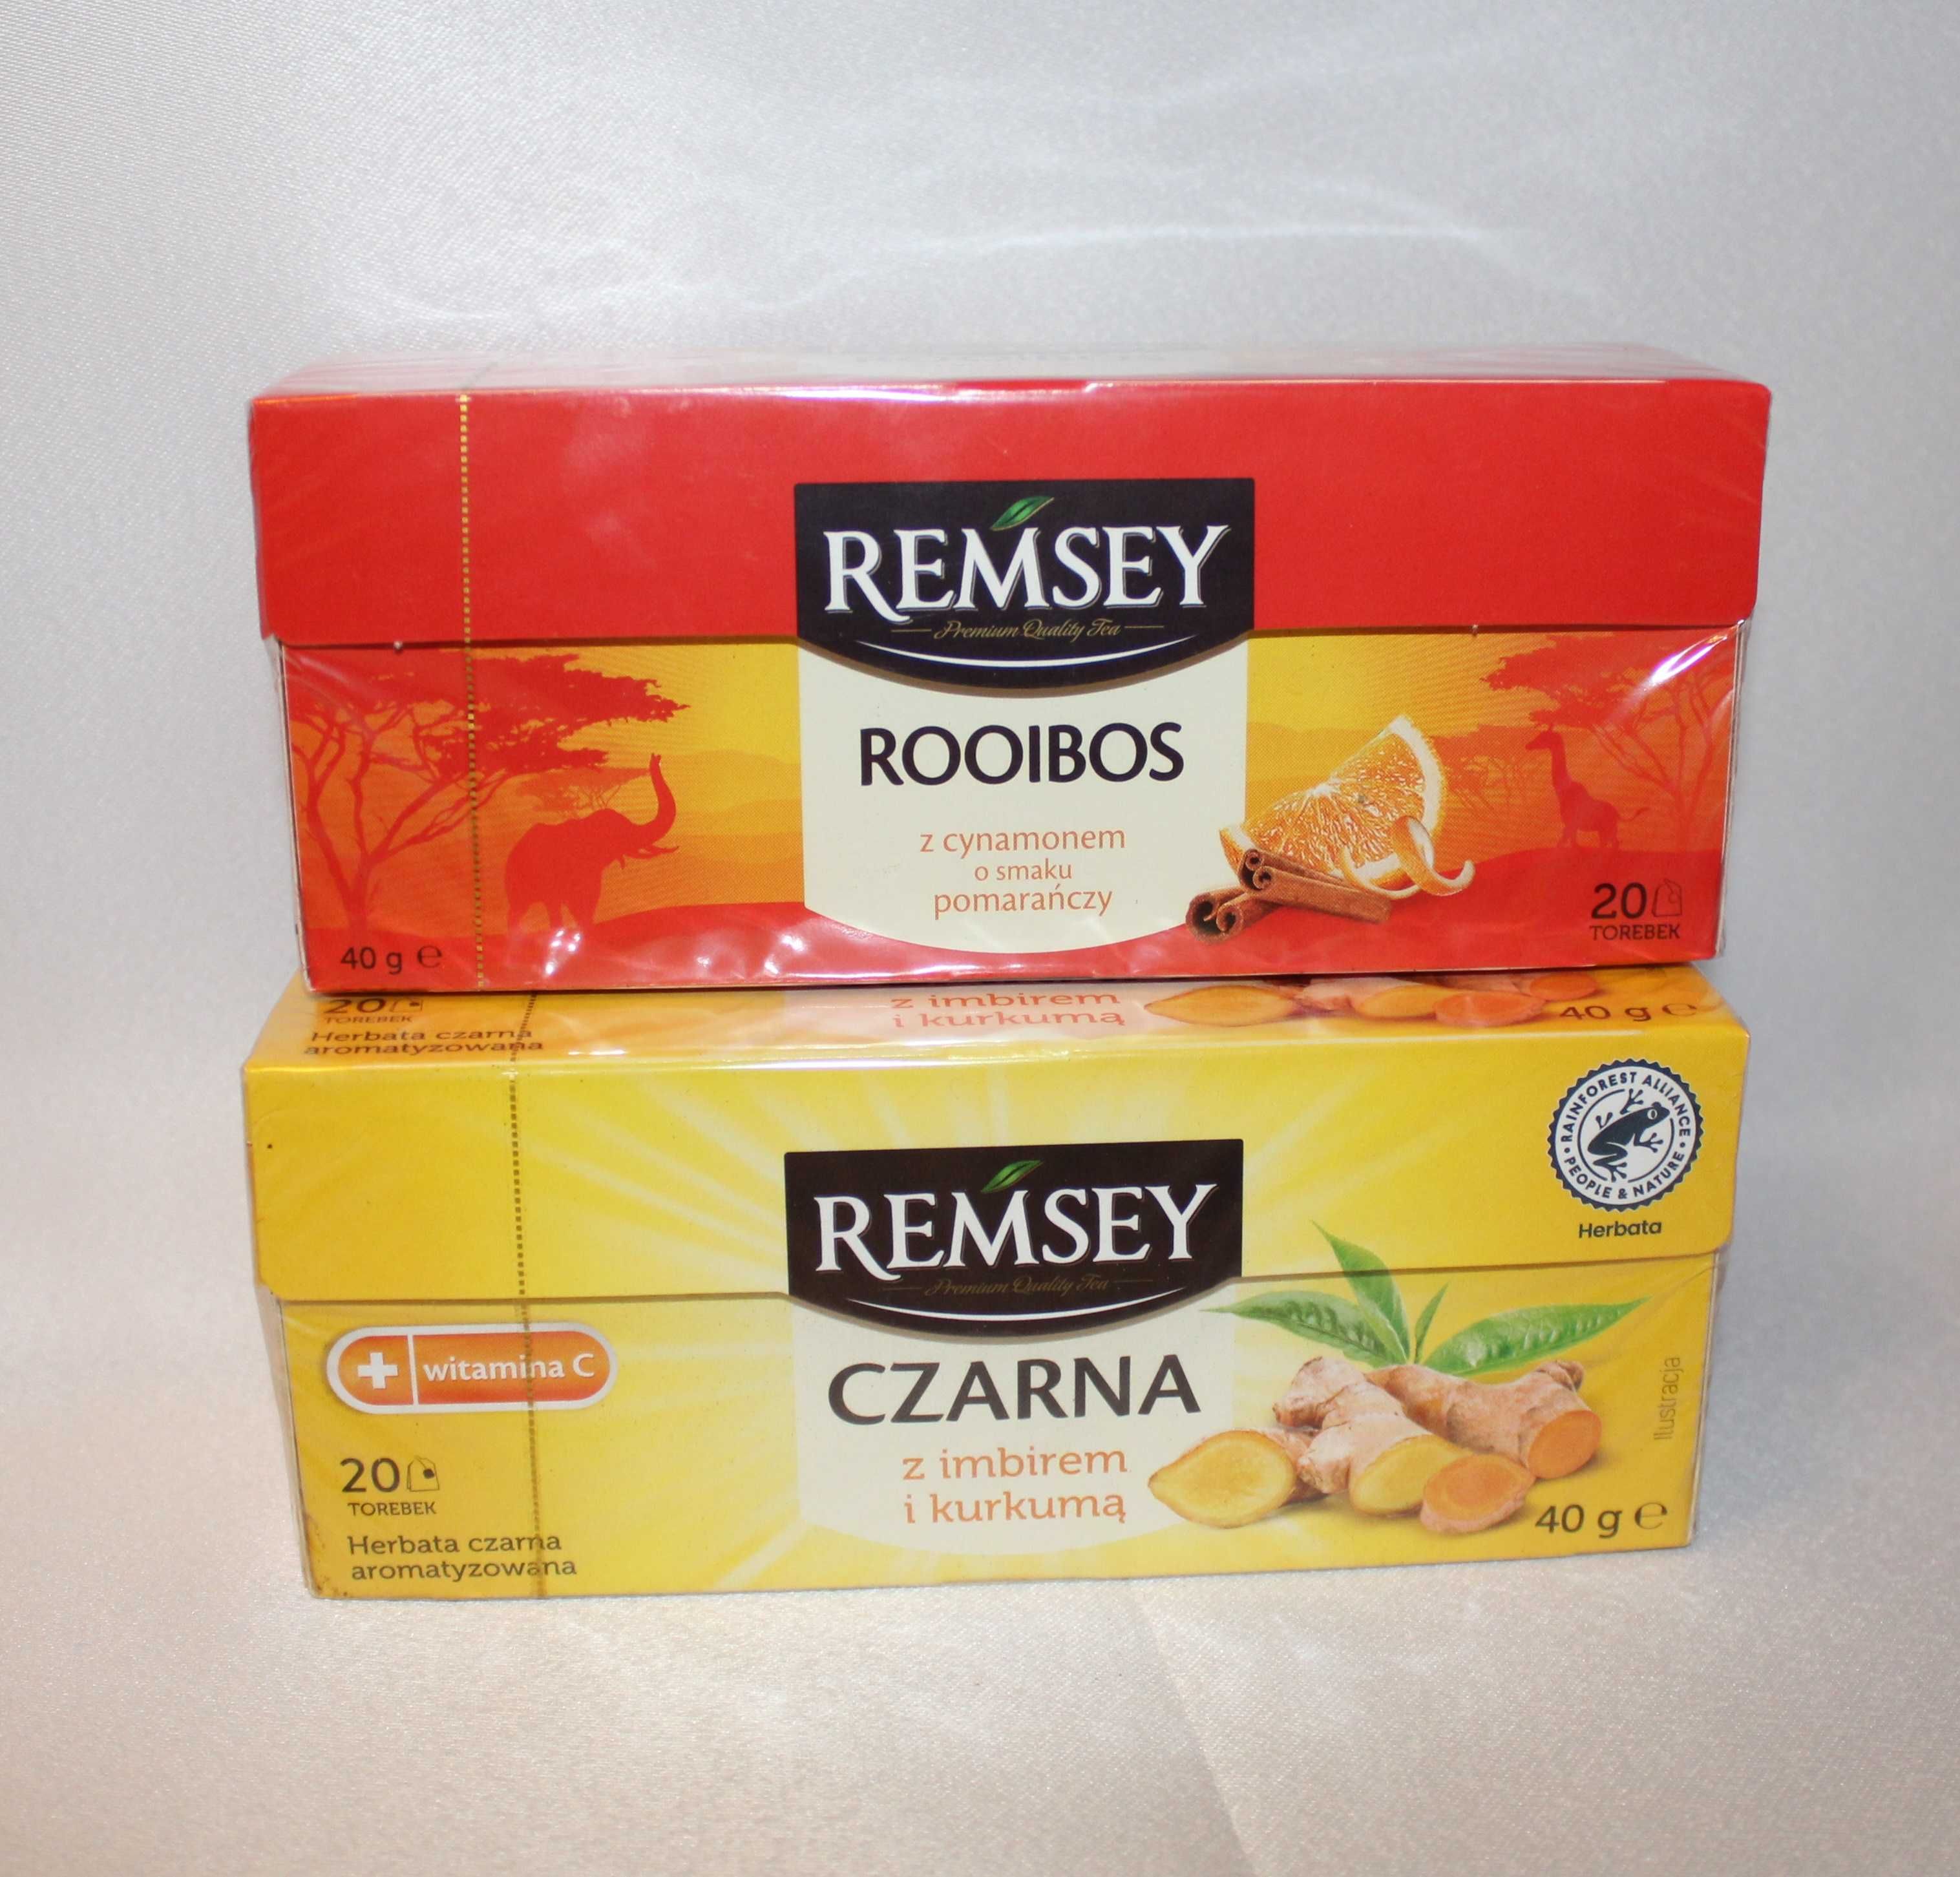 Herbata Remsey rooibos pomarańcza cynamon i imbir kurkuma po 6zł DUŻO